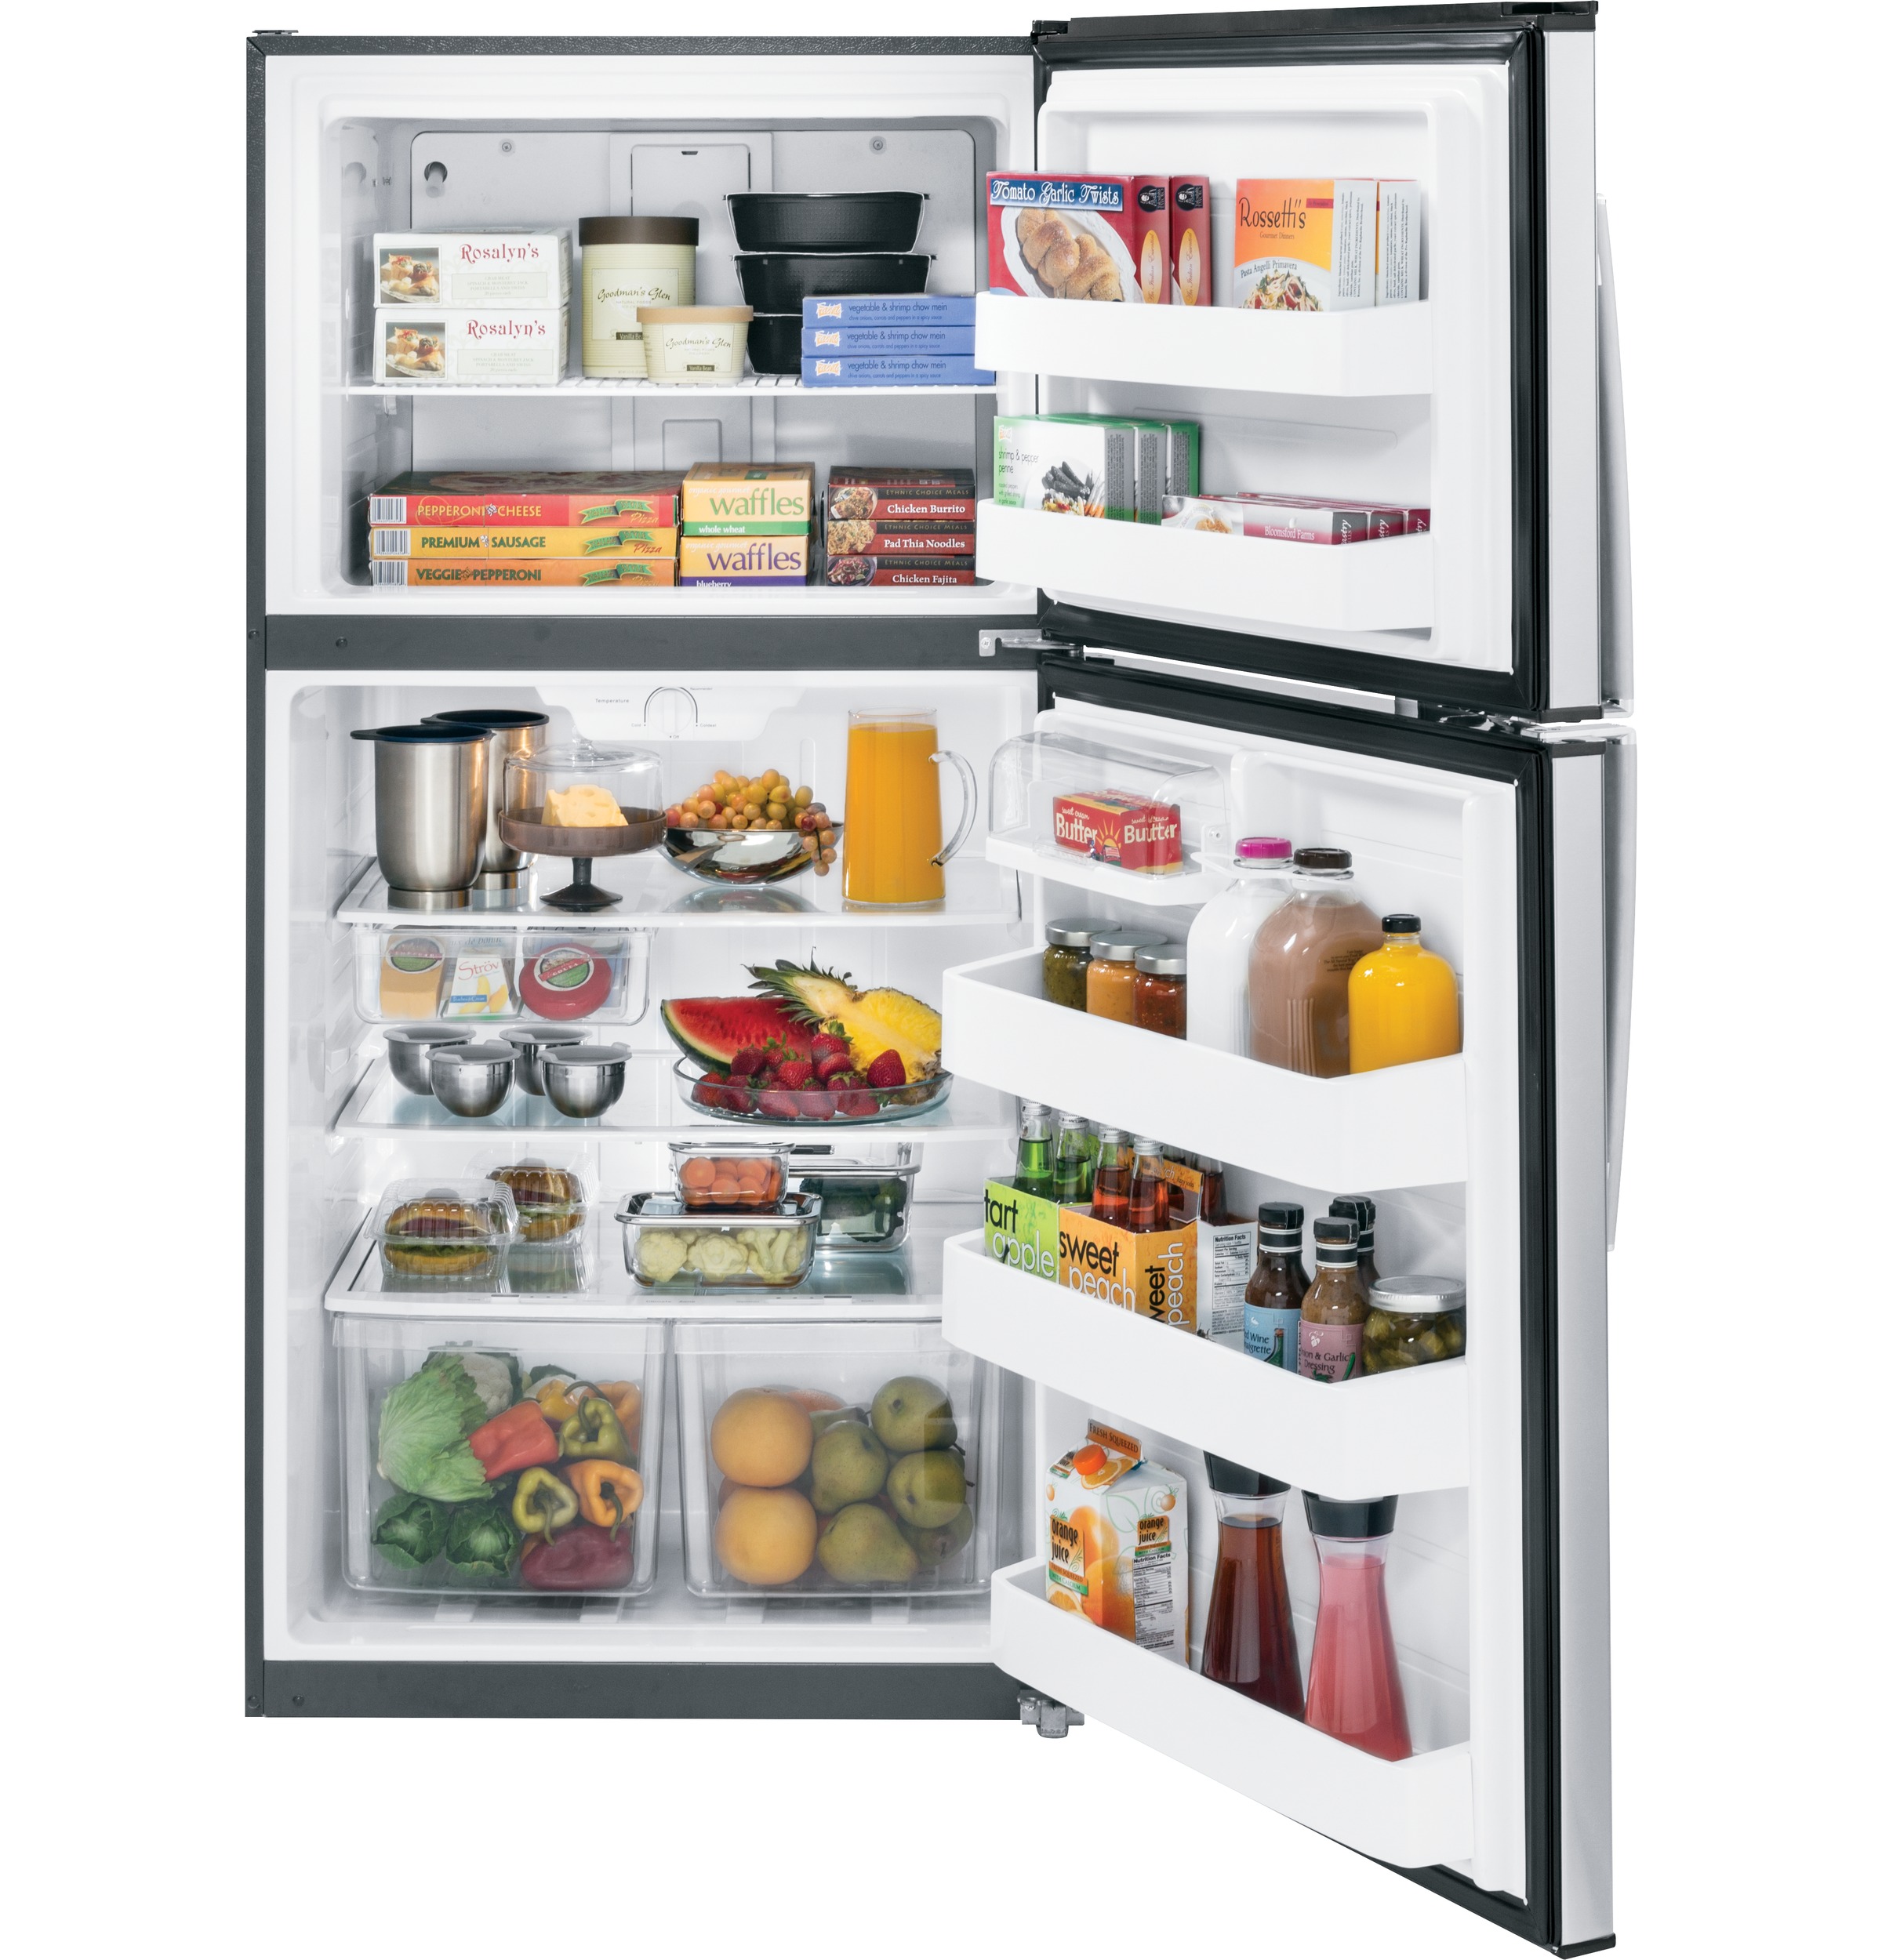  GE - 21.2 Cu. Ft. Top-Freezer Refrigerator